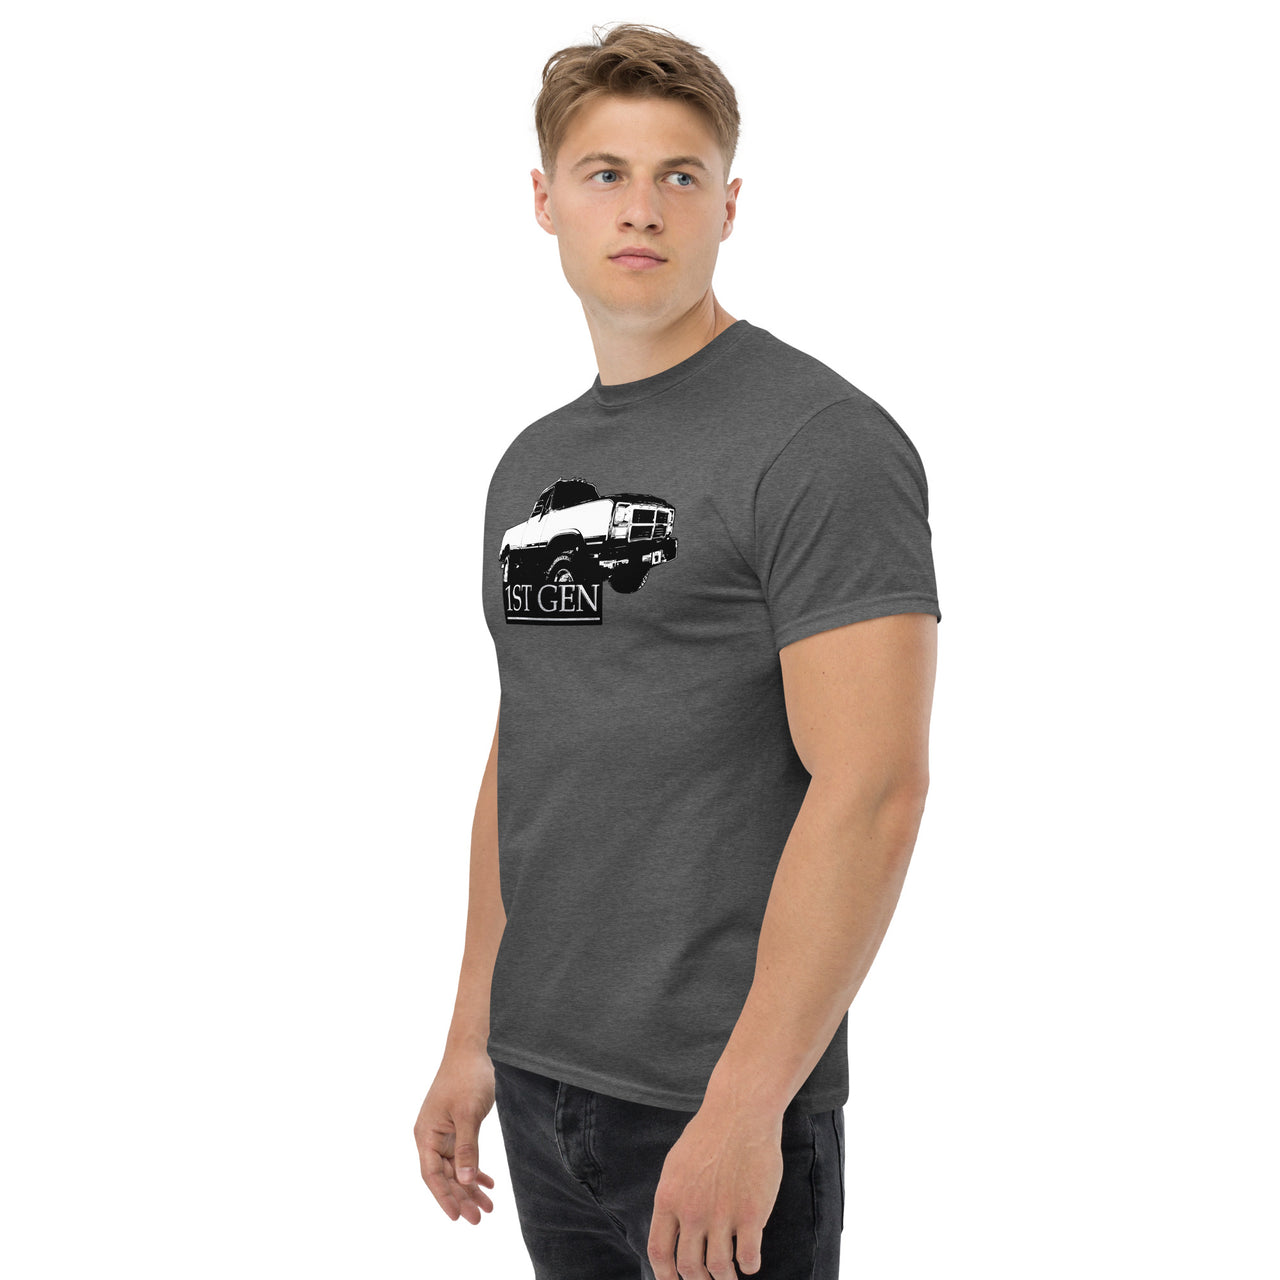 First Gen Dodge Ram T-Shirt modeled in grey